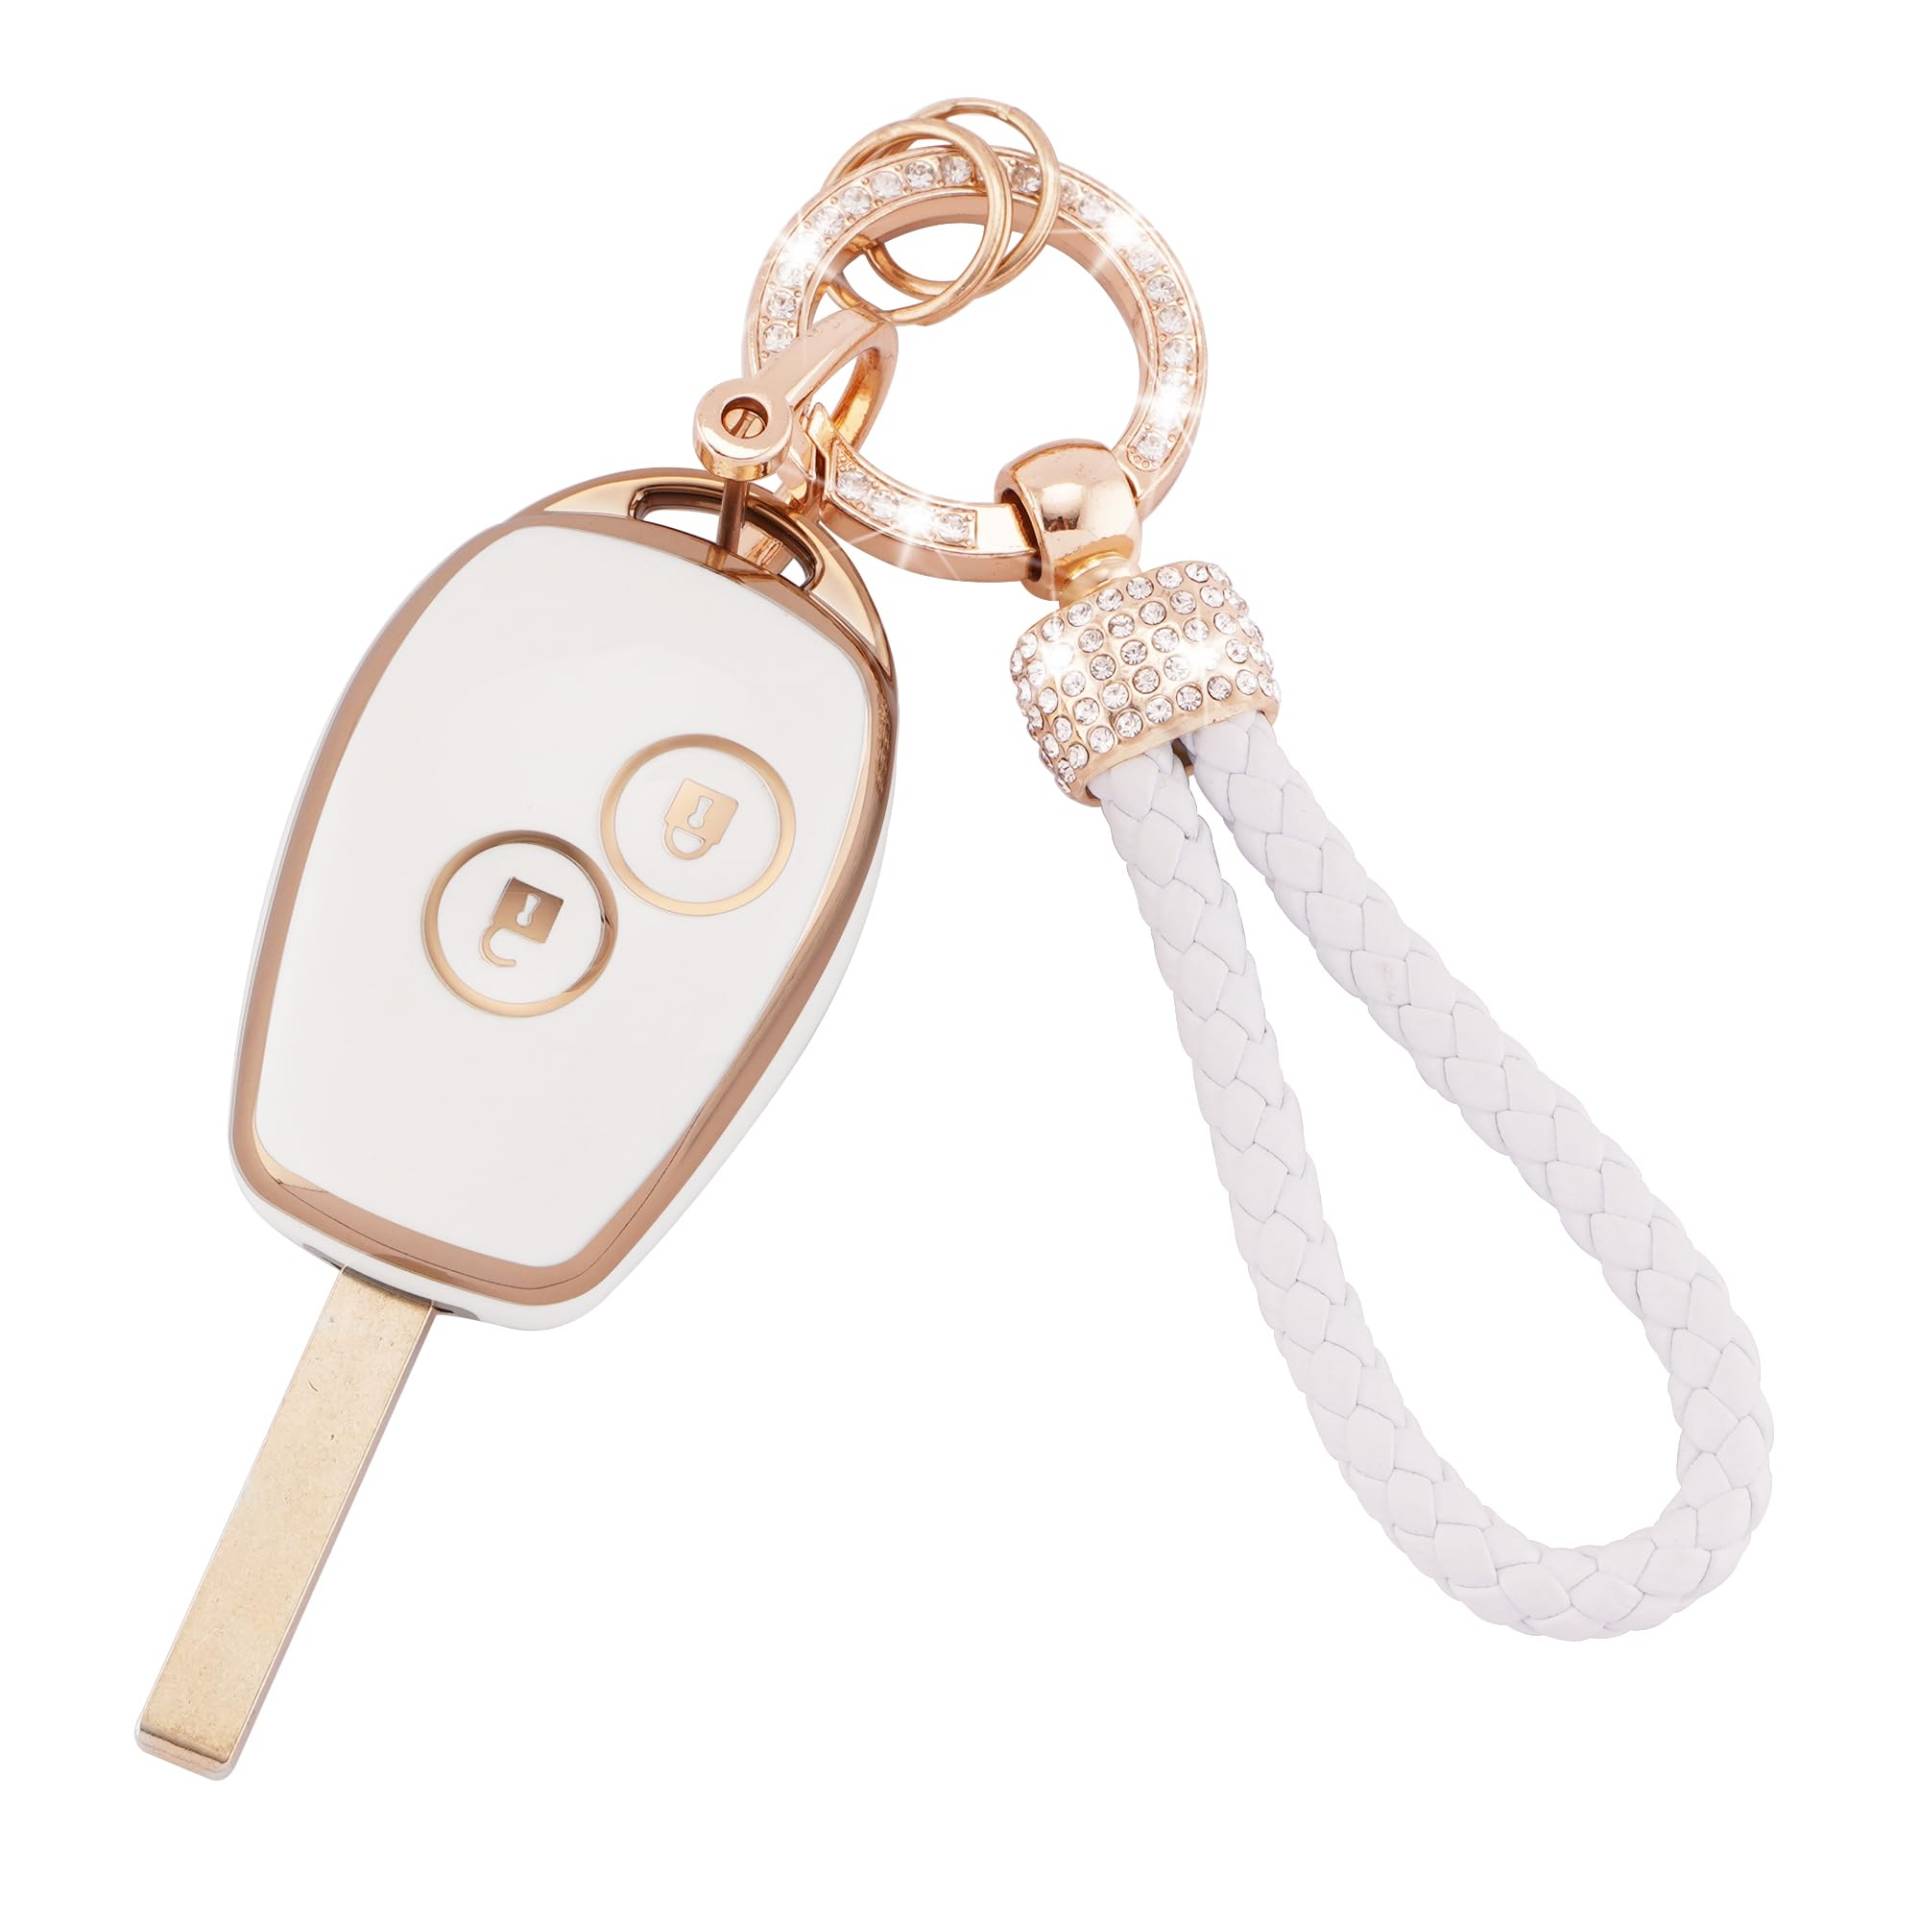 Koaudb Autoschlüssel Hülle Cover Passt für Renault Clio Kangoo Megane Laguna Modus Dacia Twingo Kangoo 2 Tasten Schlüsseletui TPU Schlüsselhülle mit Schlüsselanhänger (Rnl-2R) von Koaudb